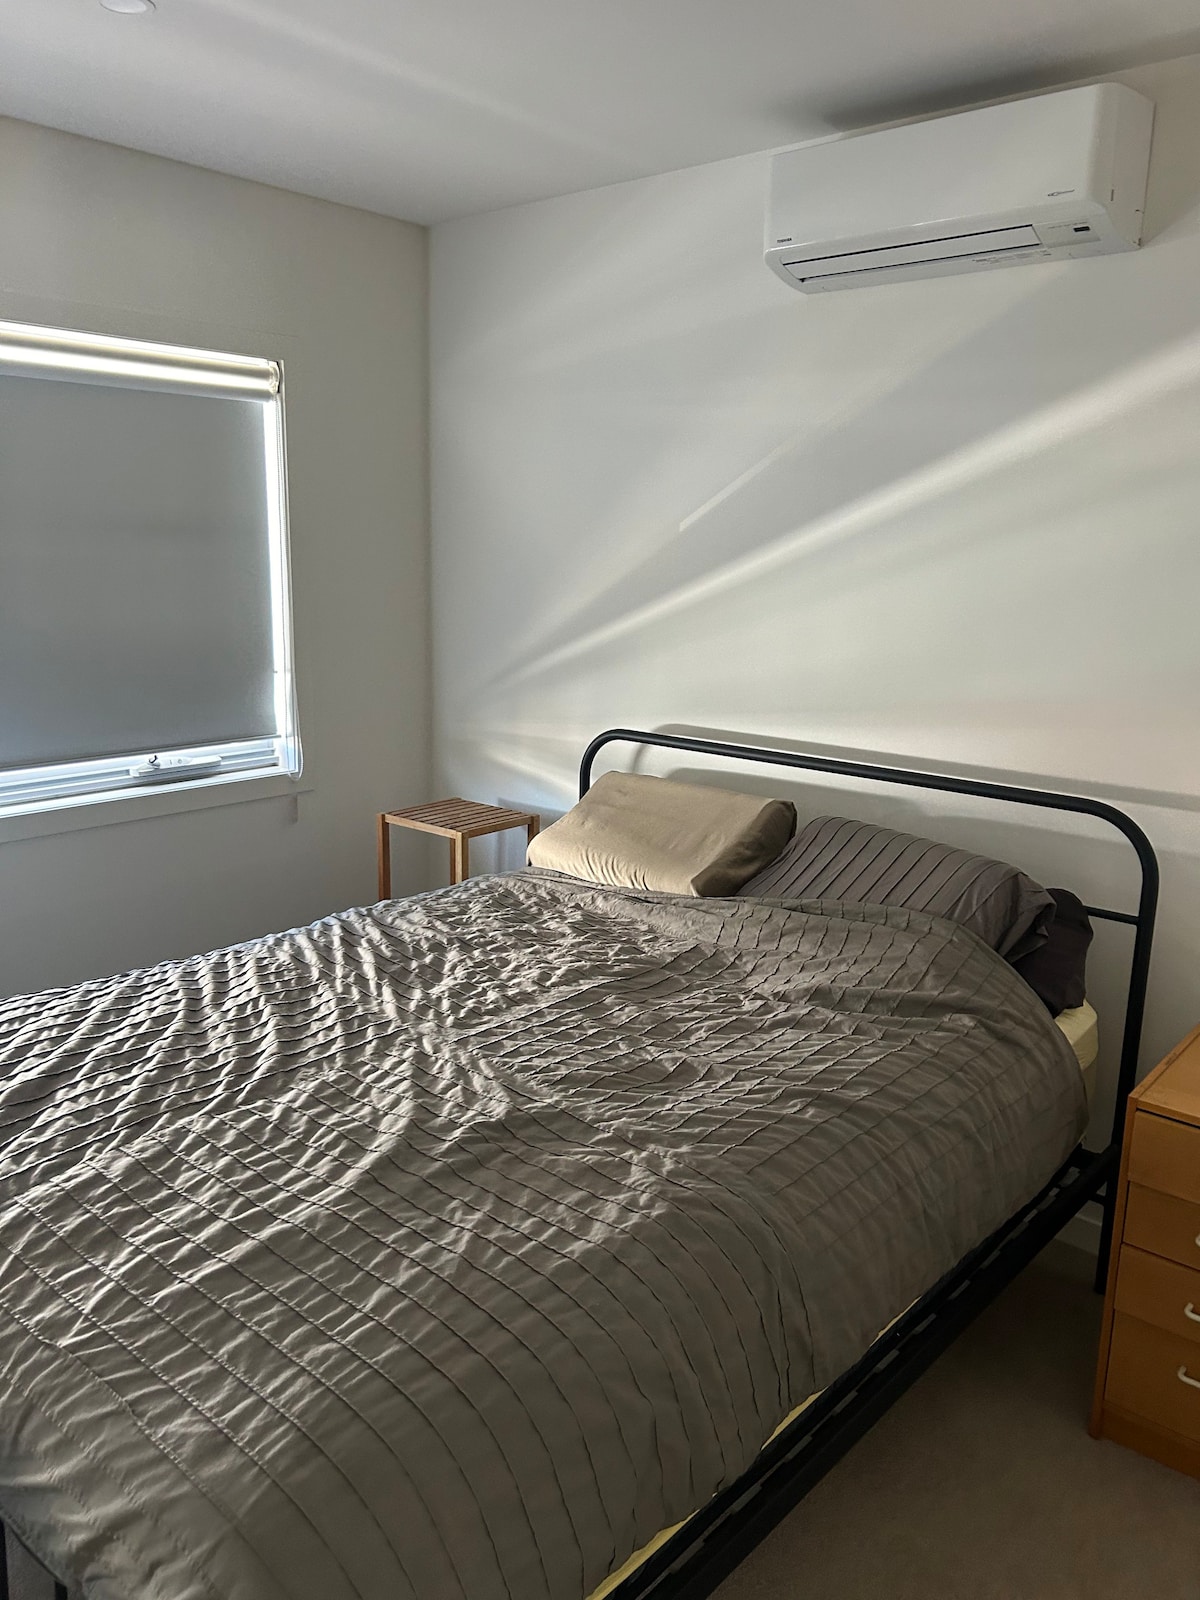 2 bed 2 bath apartment in Denman